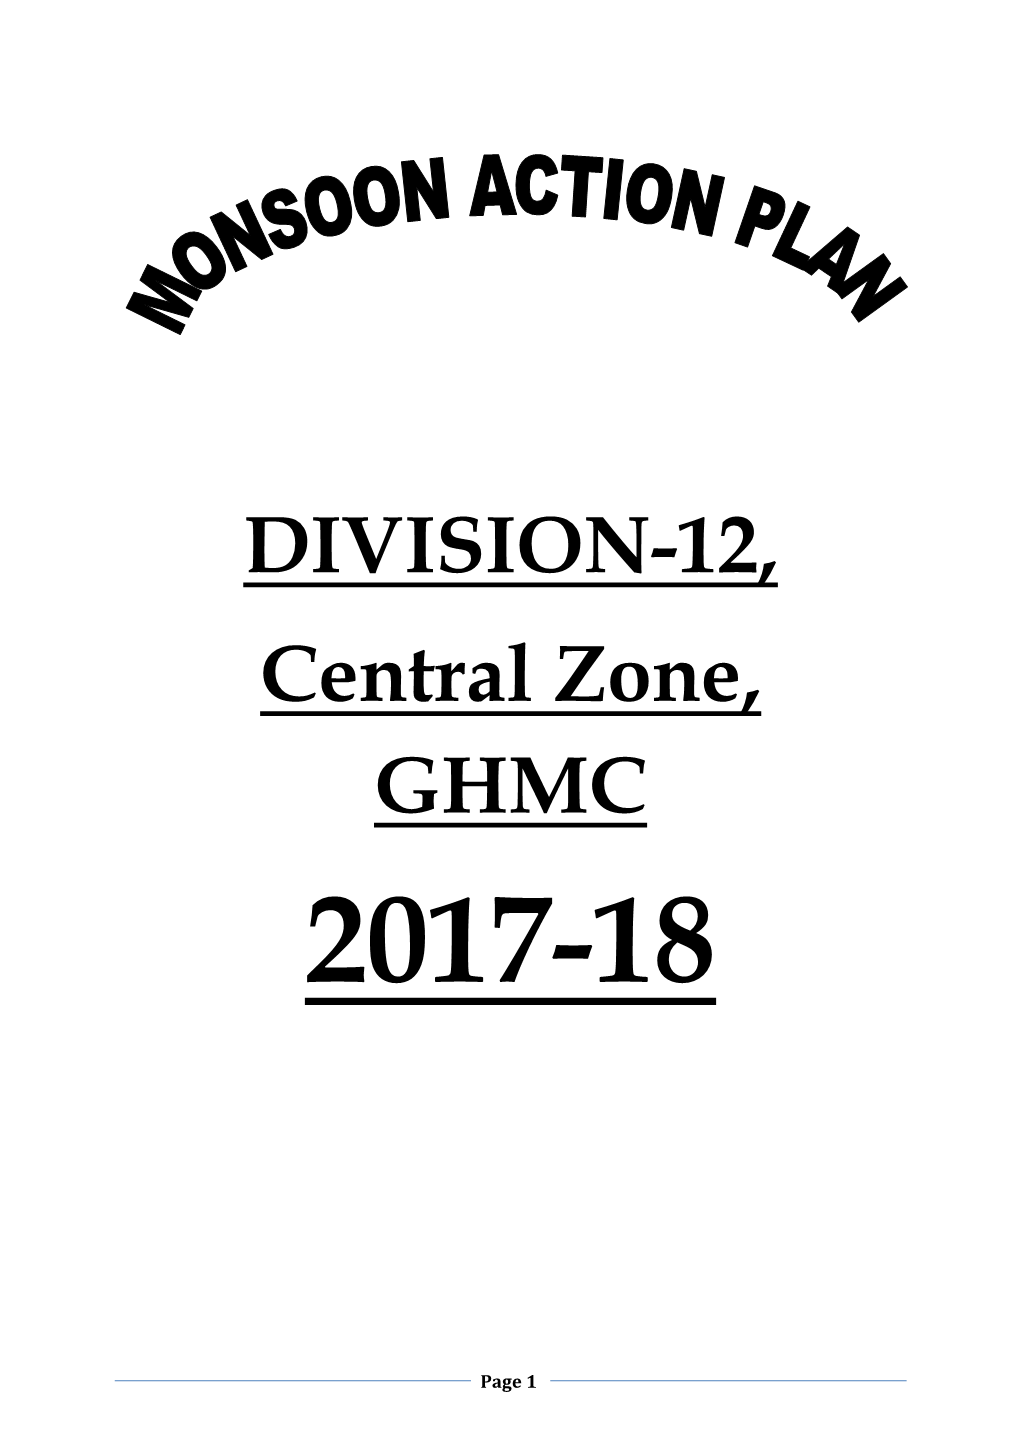 DIVISION-12, Central Zone, GHMC 2017-18